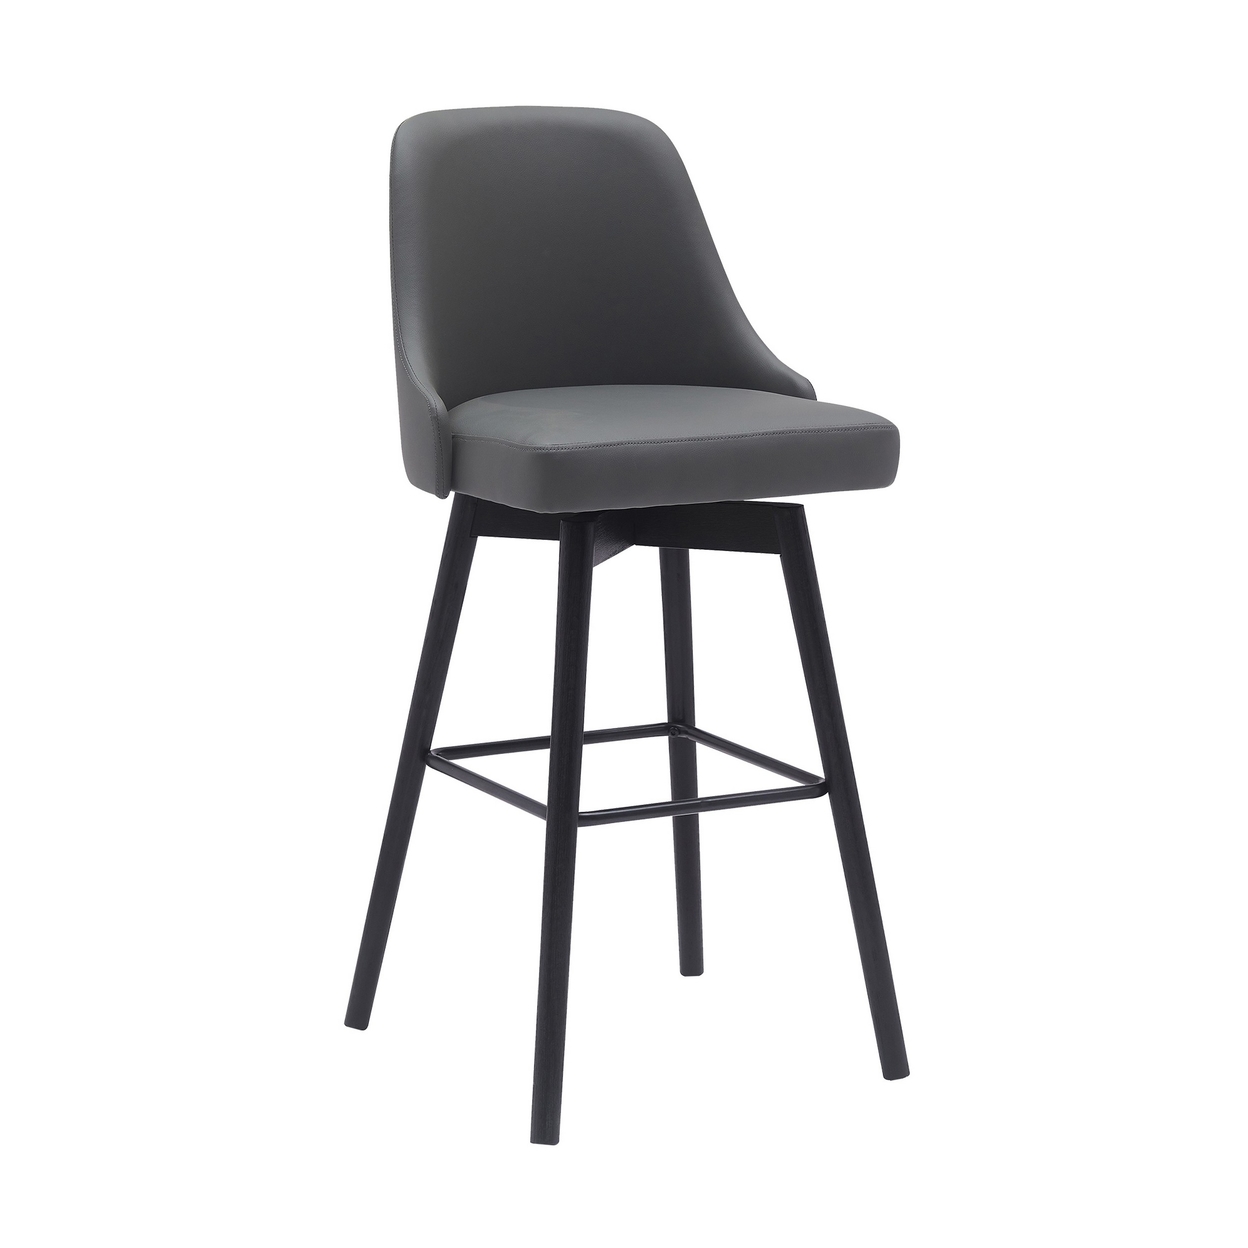 Sean 30 Inch Barstool Chair, Parson Style, Swivel, Gray Faux Leather, Black - Saltoro Sherpi